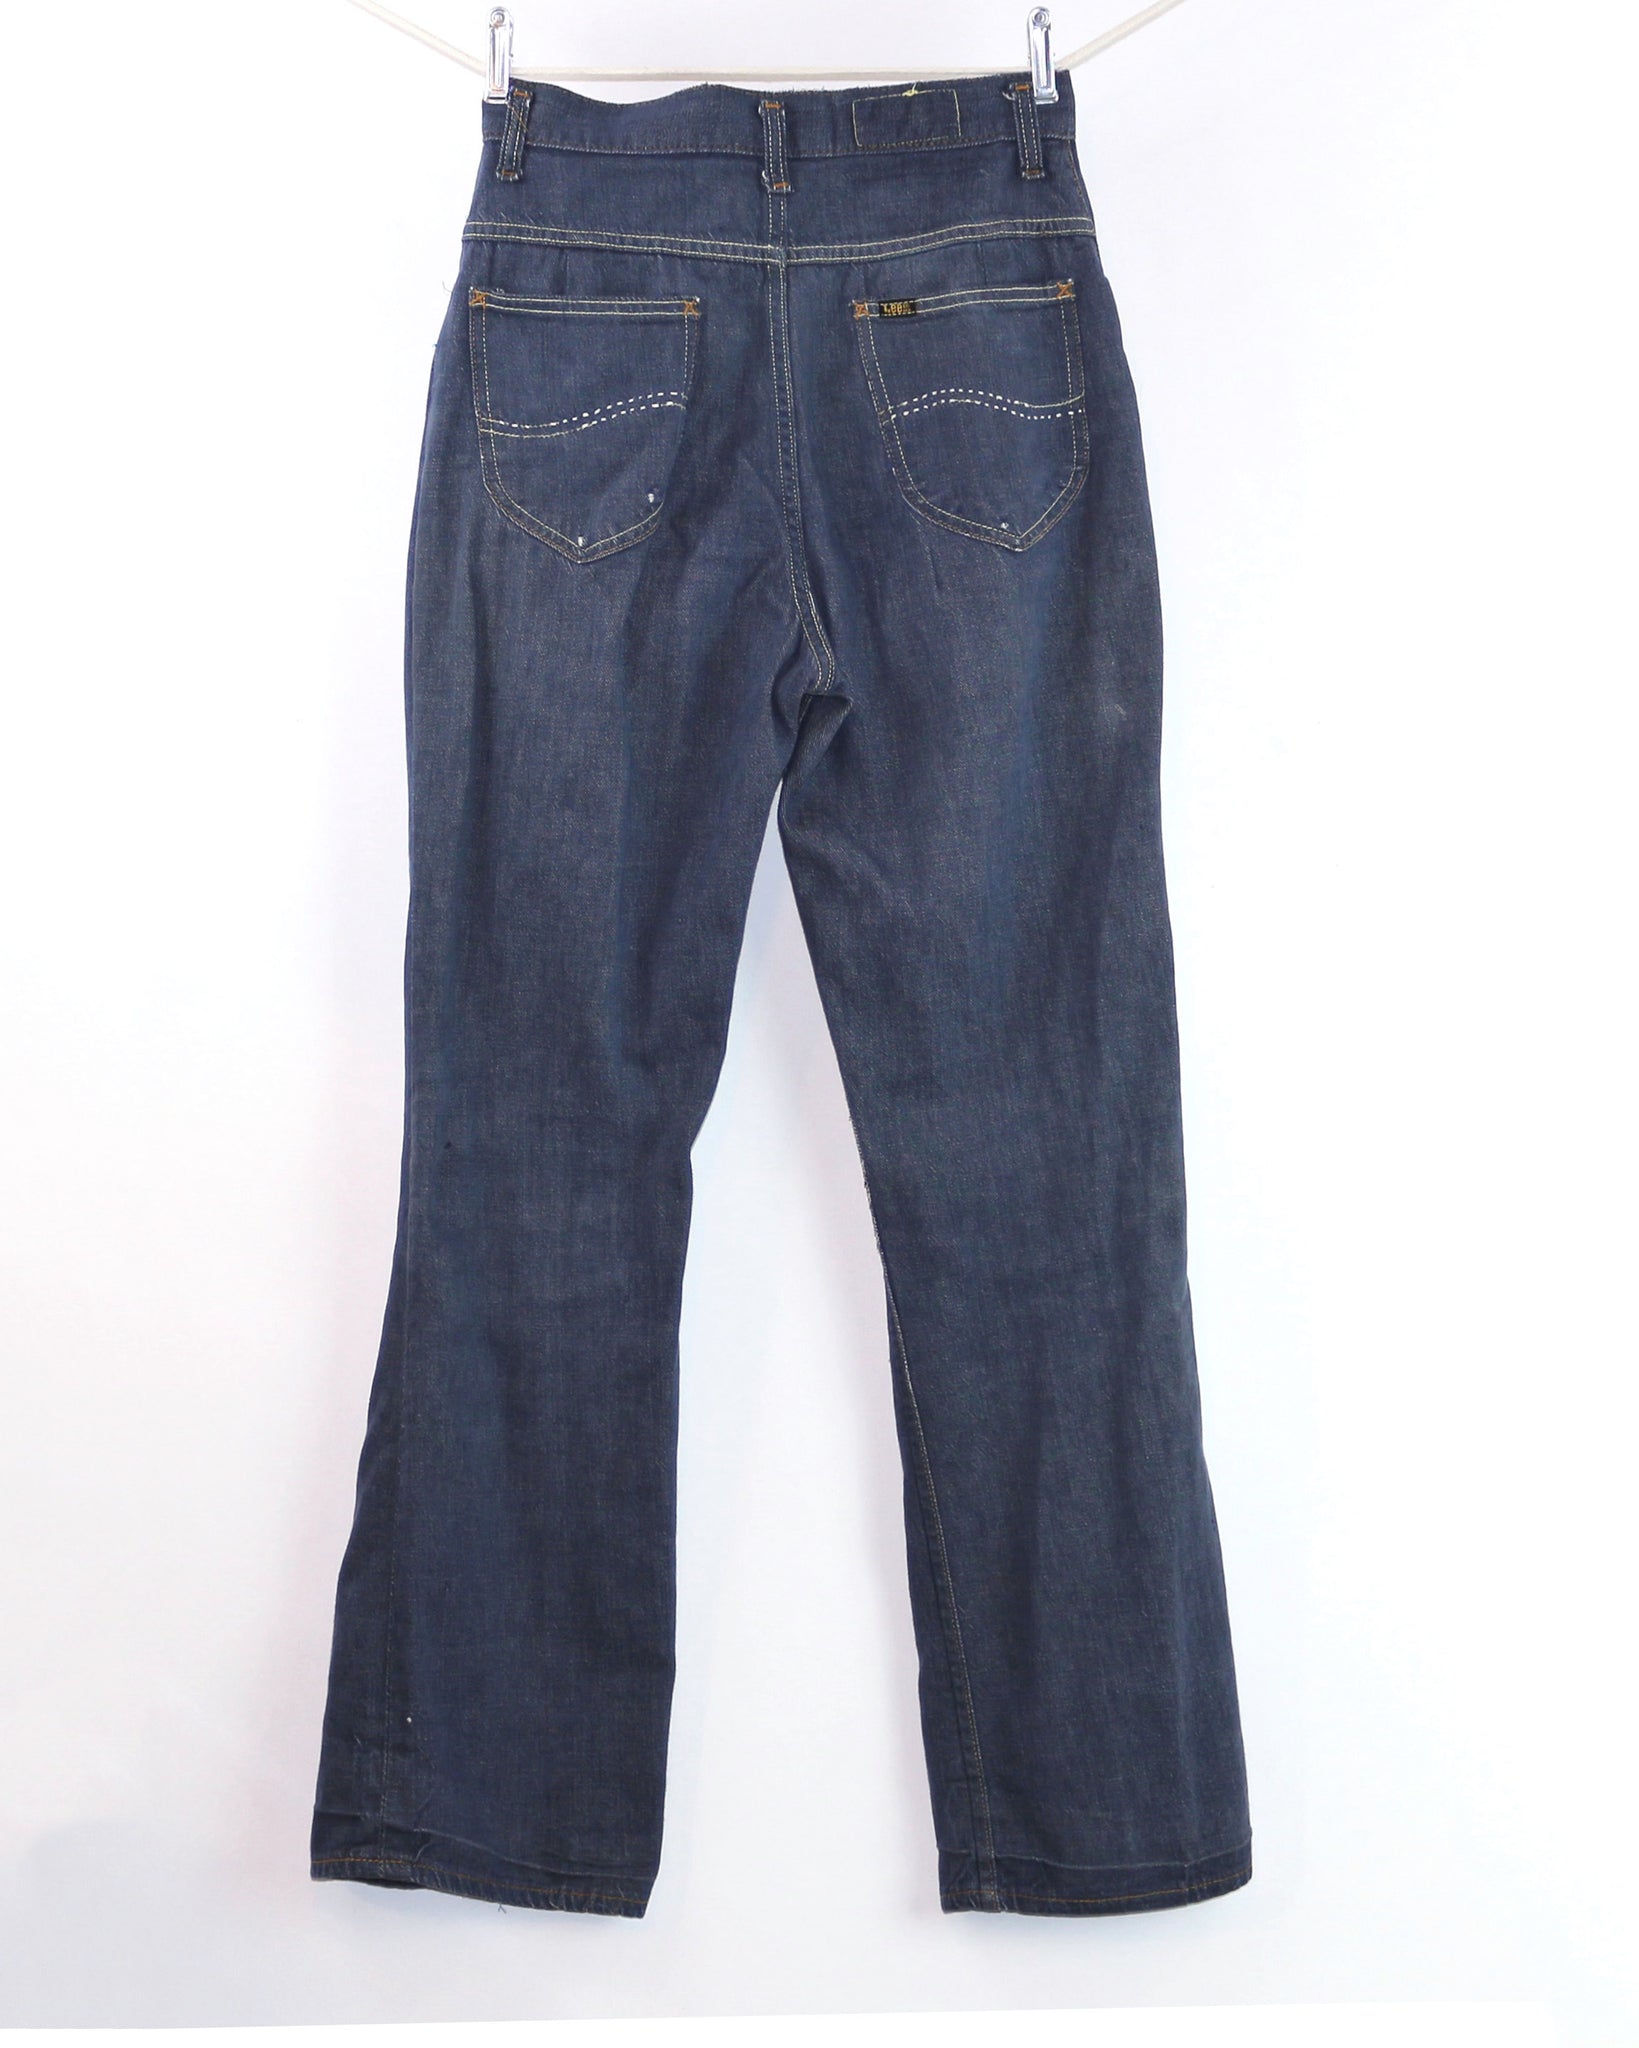 Vintage LEE Jeans High Waisted Jeans 26 27 Waist Lee Riders